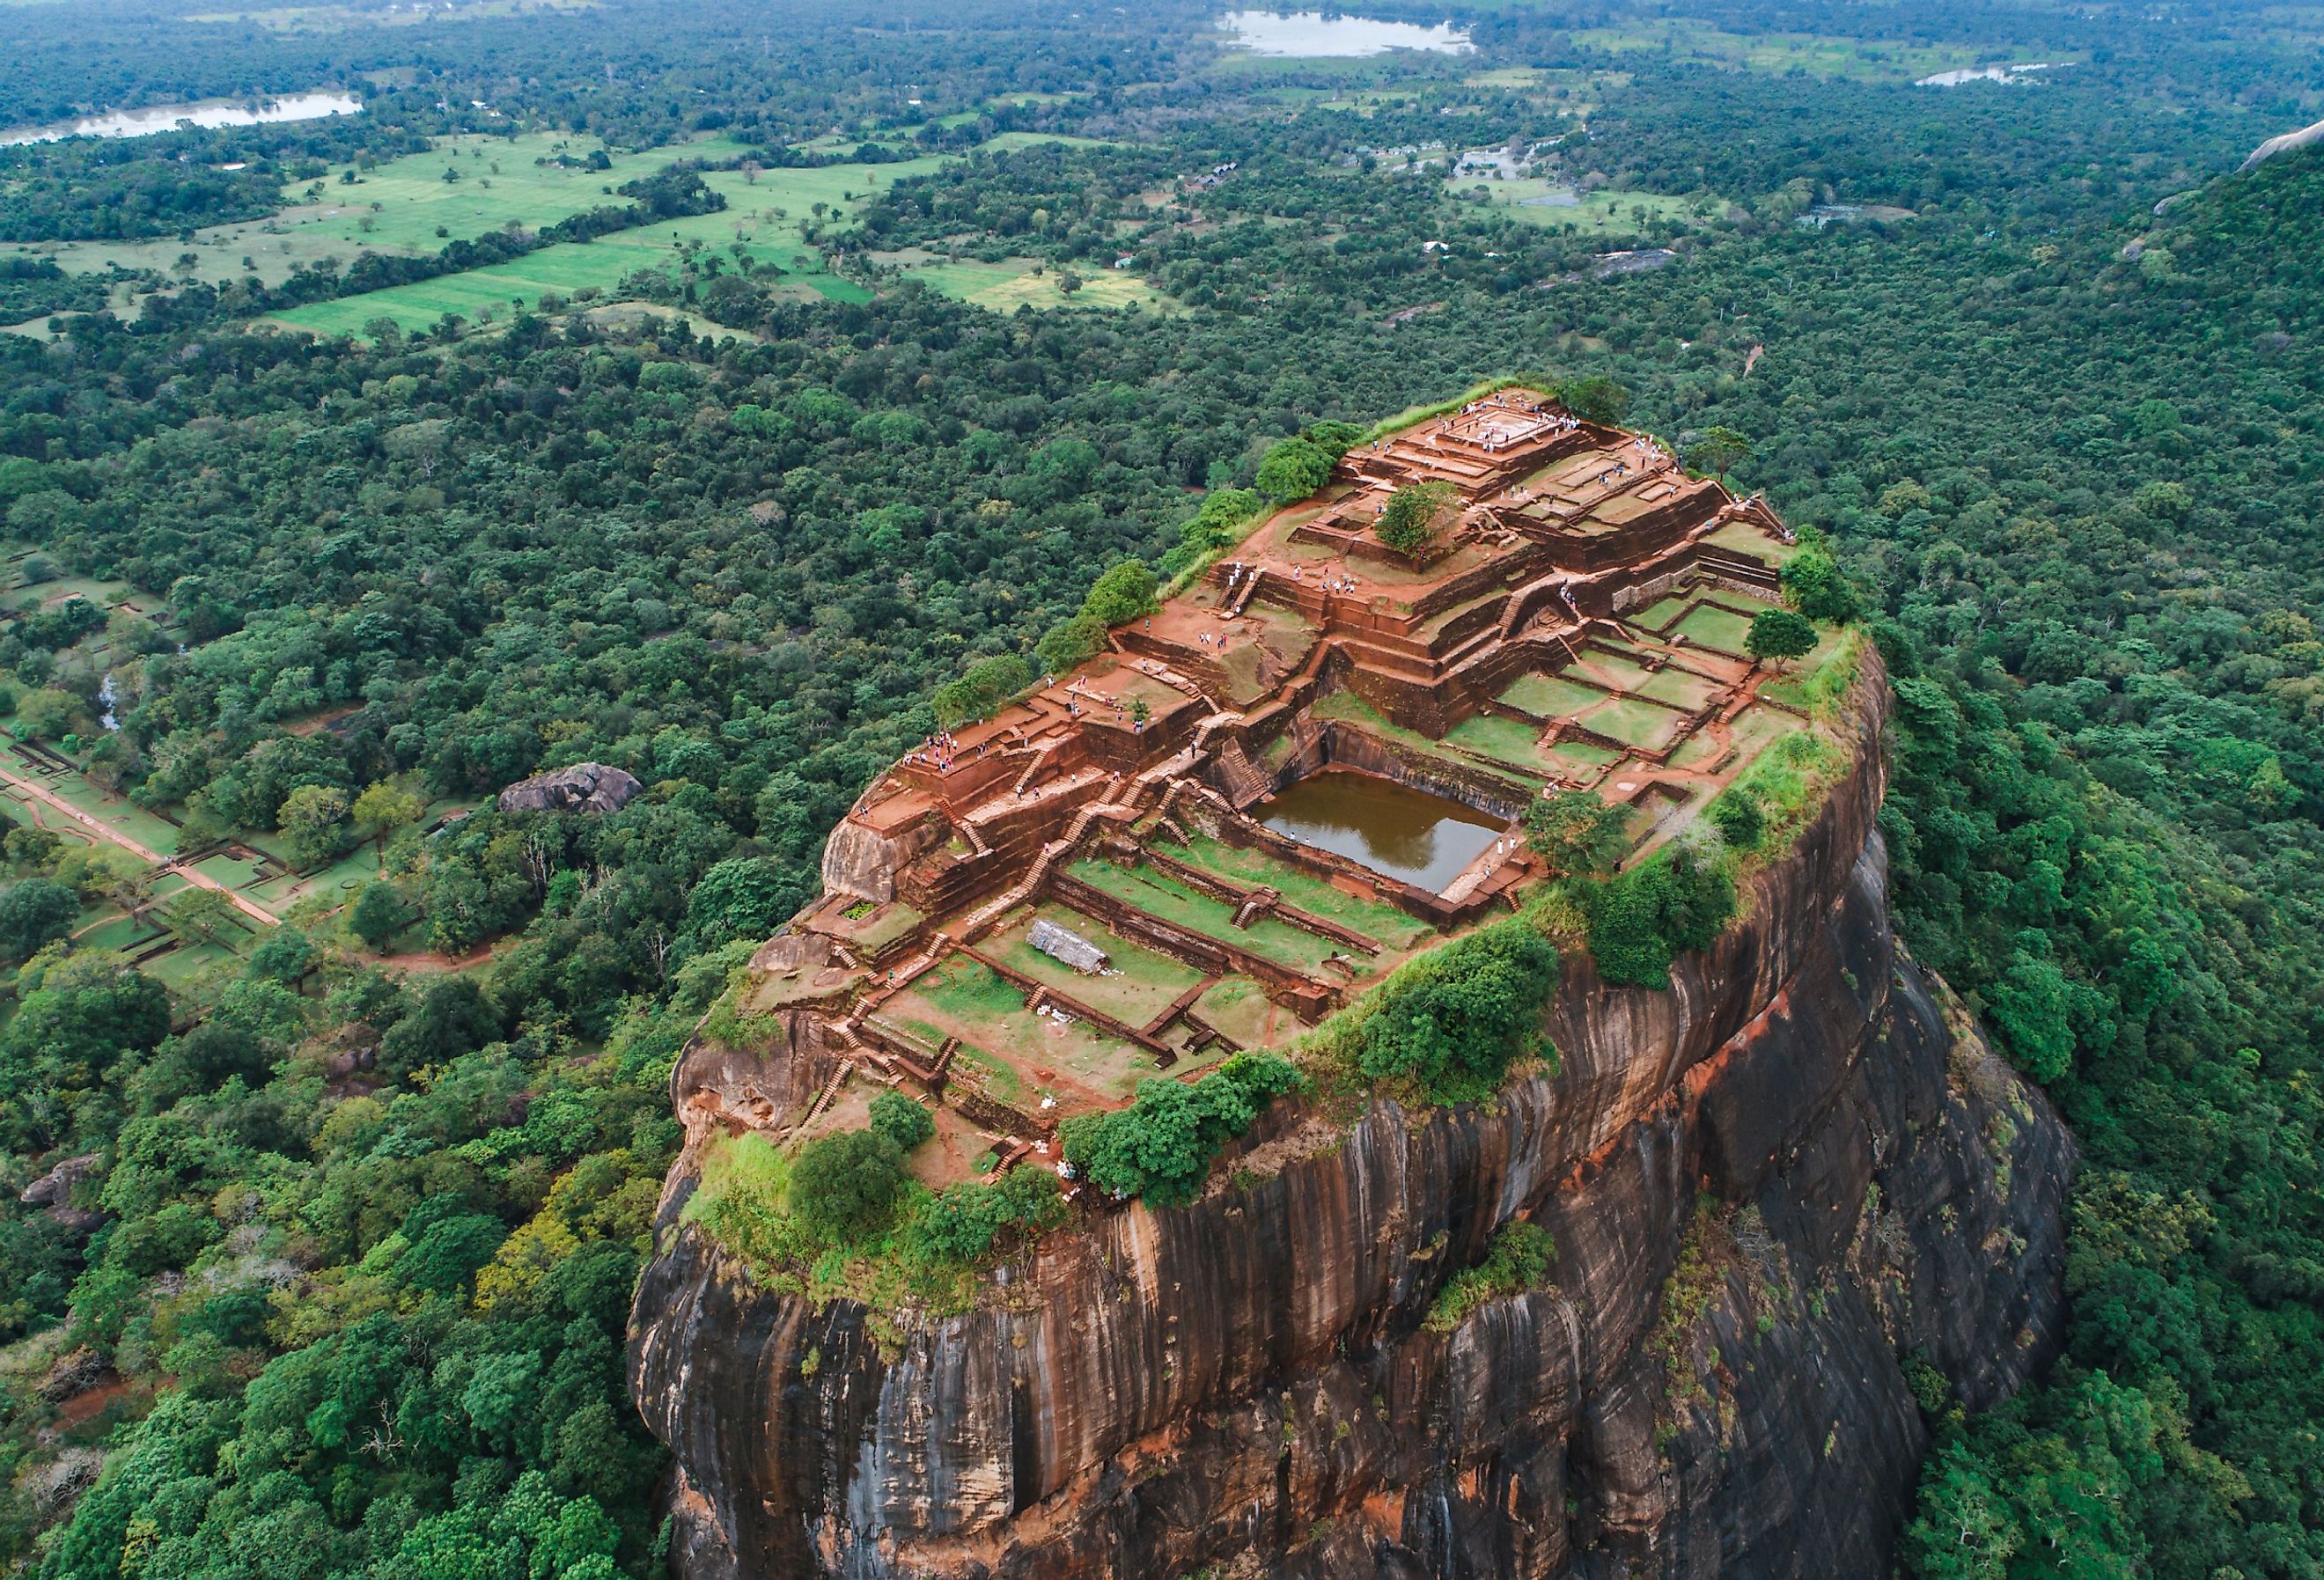 Aerial view of Sigiriya, Sri Lanka. Image credit Radchuck O.S via Shutterstock